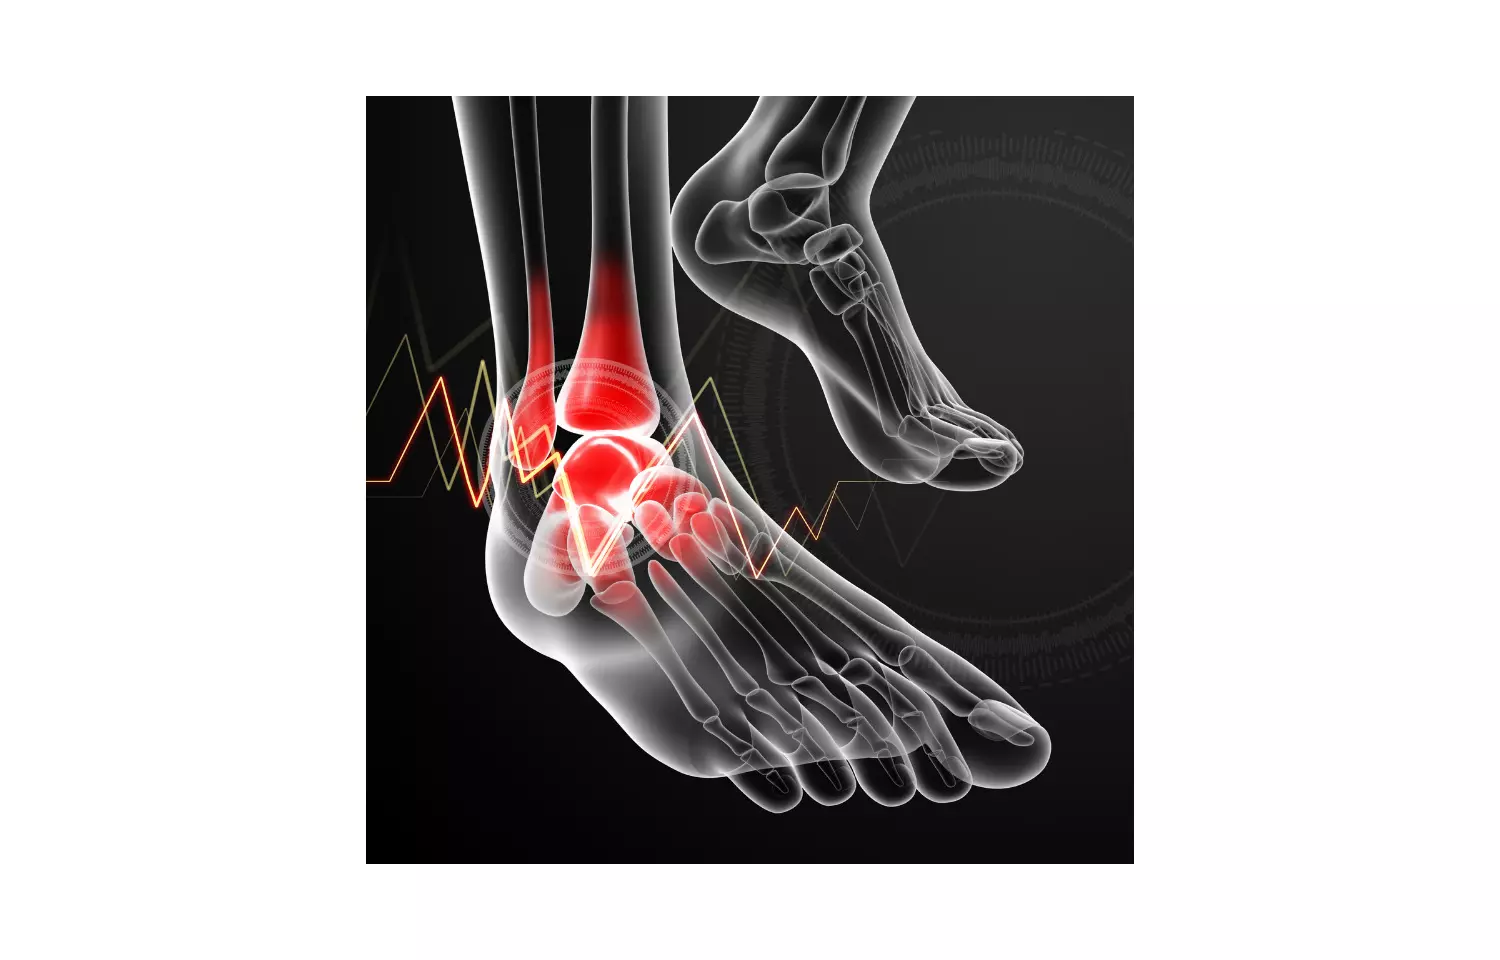 Platelet rich plasma not effective method to treat ankle arthritis: Study